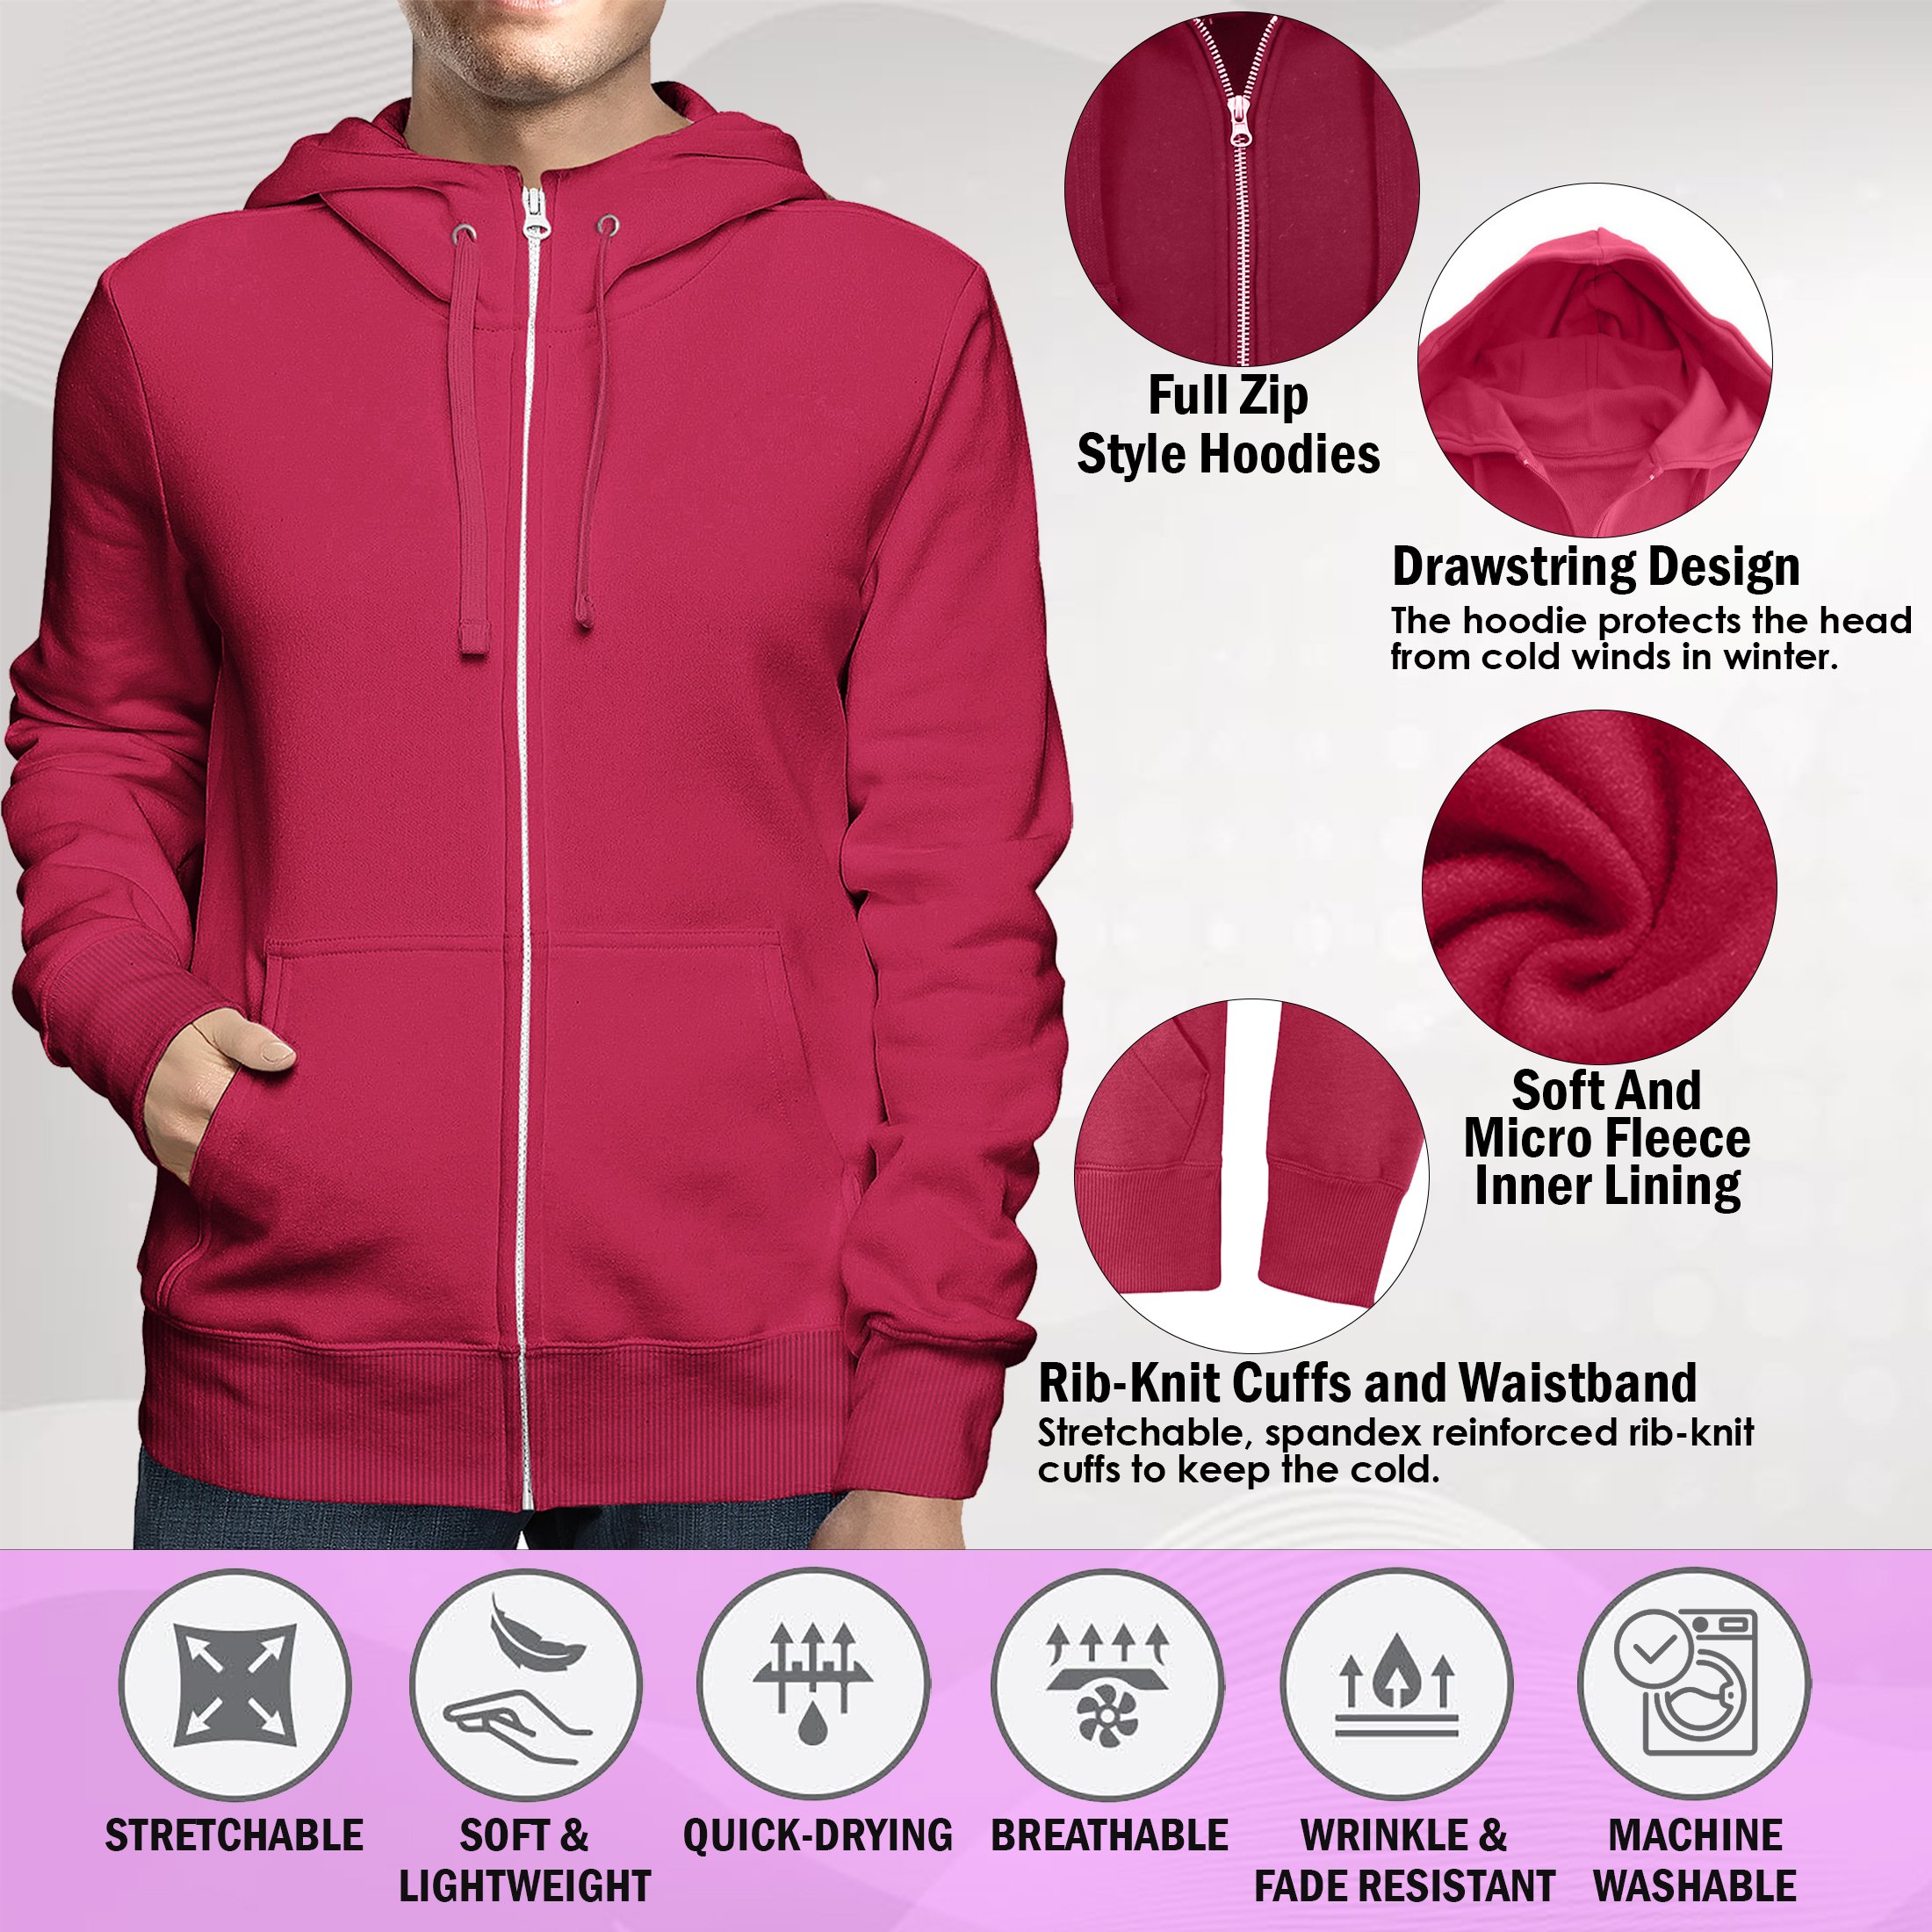 2-Pack: Men's Full Zip Up Fleece-Lined Hoodie Sweatshirt (Big & Tall Size Available) - Olive, Medium